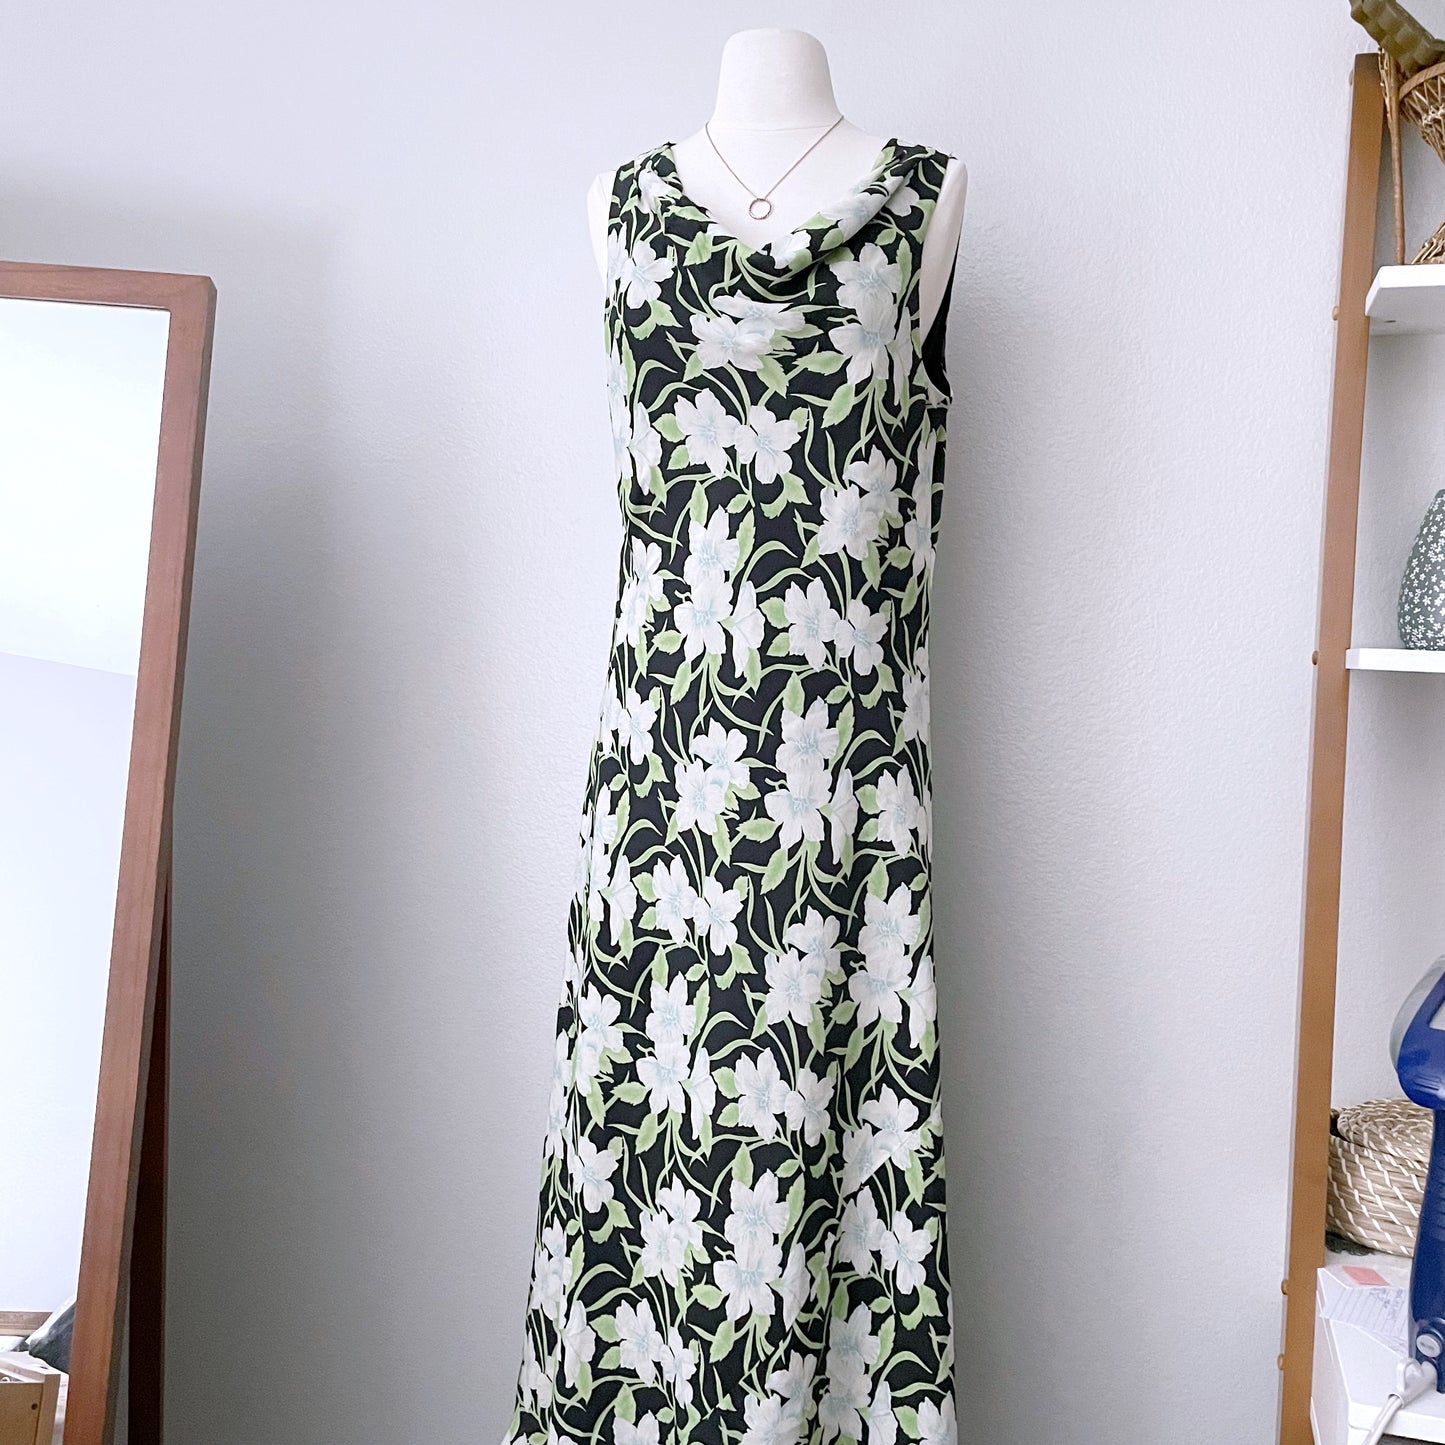 Floral Cowl Neck Maxi Dress (14)